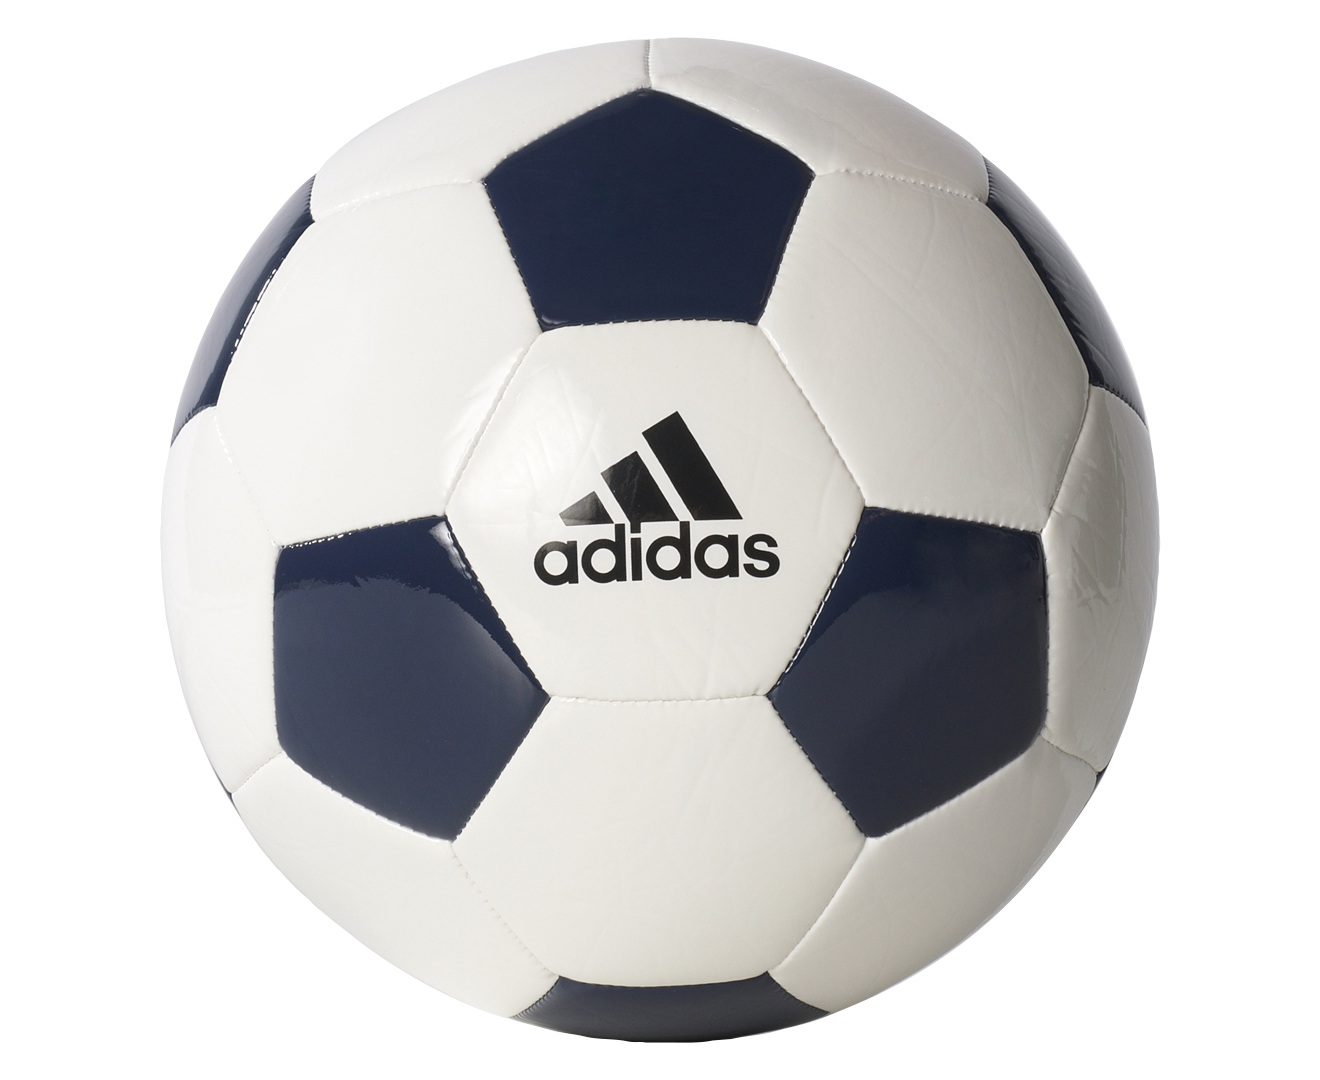 Adidas EPP II Size 5 Soccer Ball - White/Navy | eBay